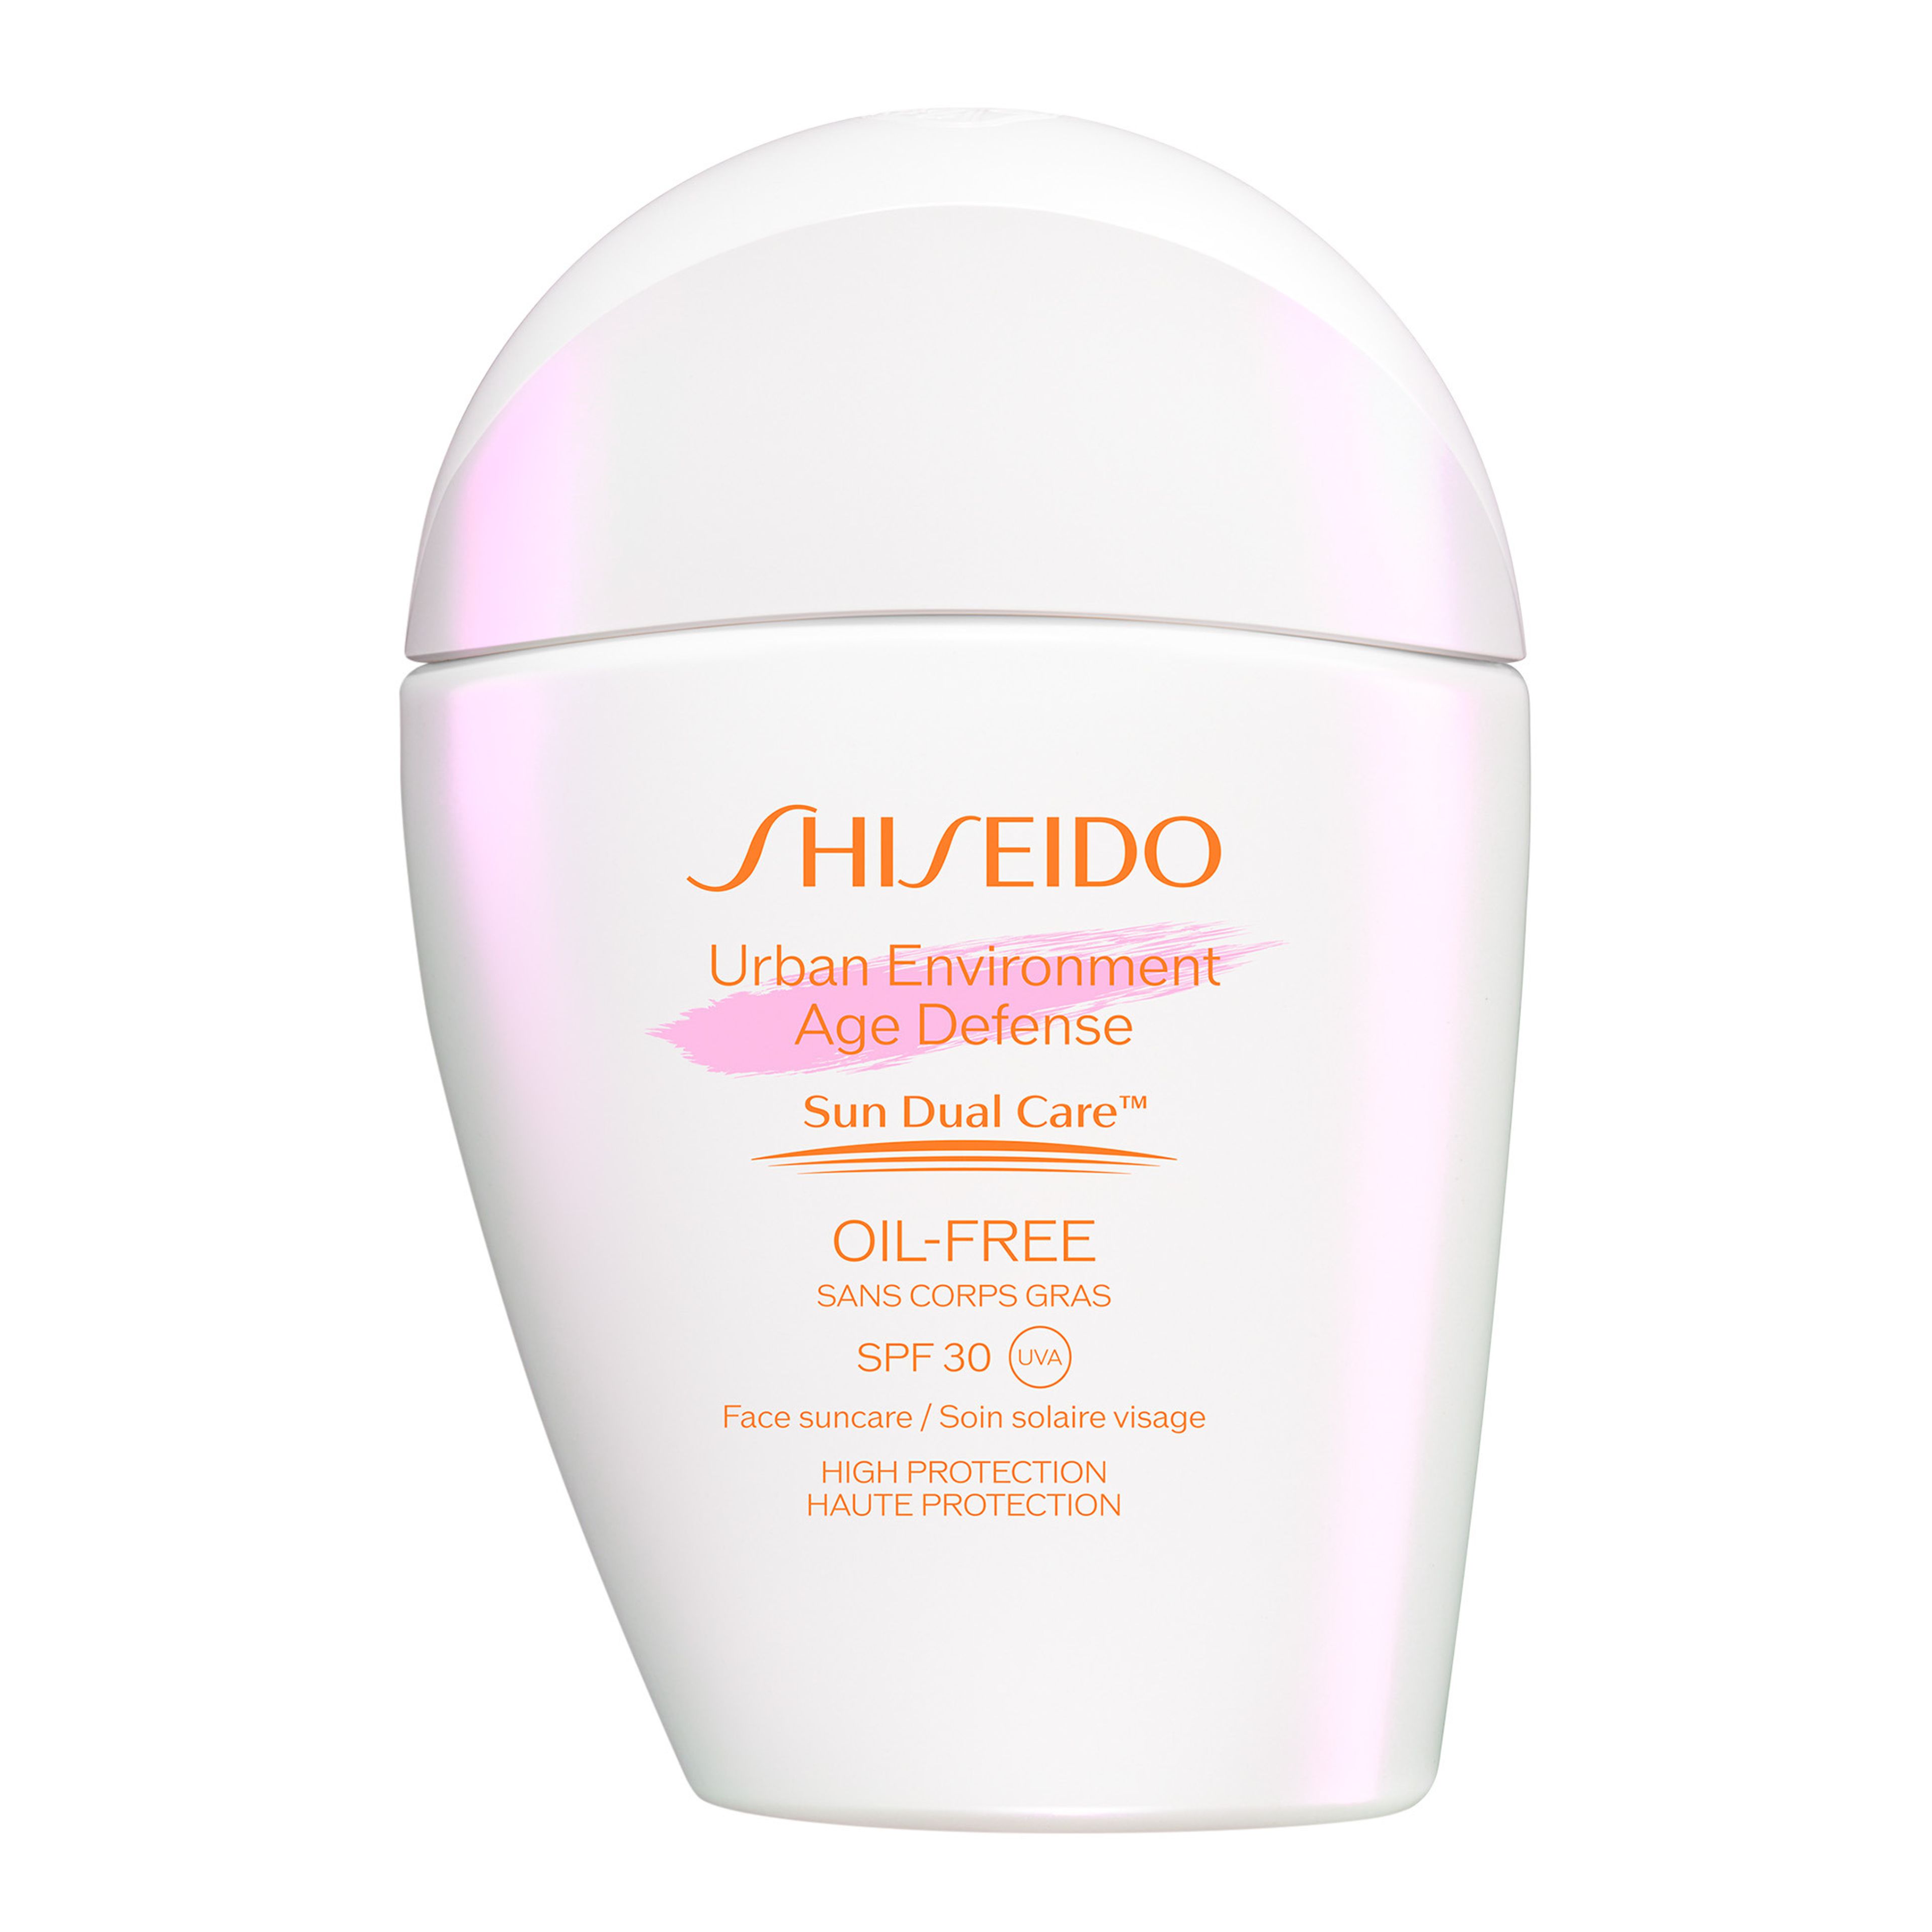 Urban Environment Age Defense Oil-free Spf 30 Shiseido 1